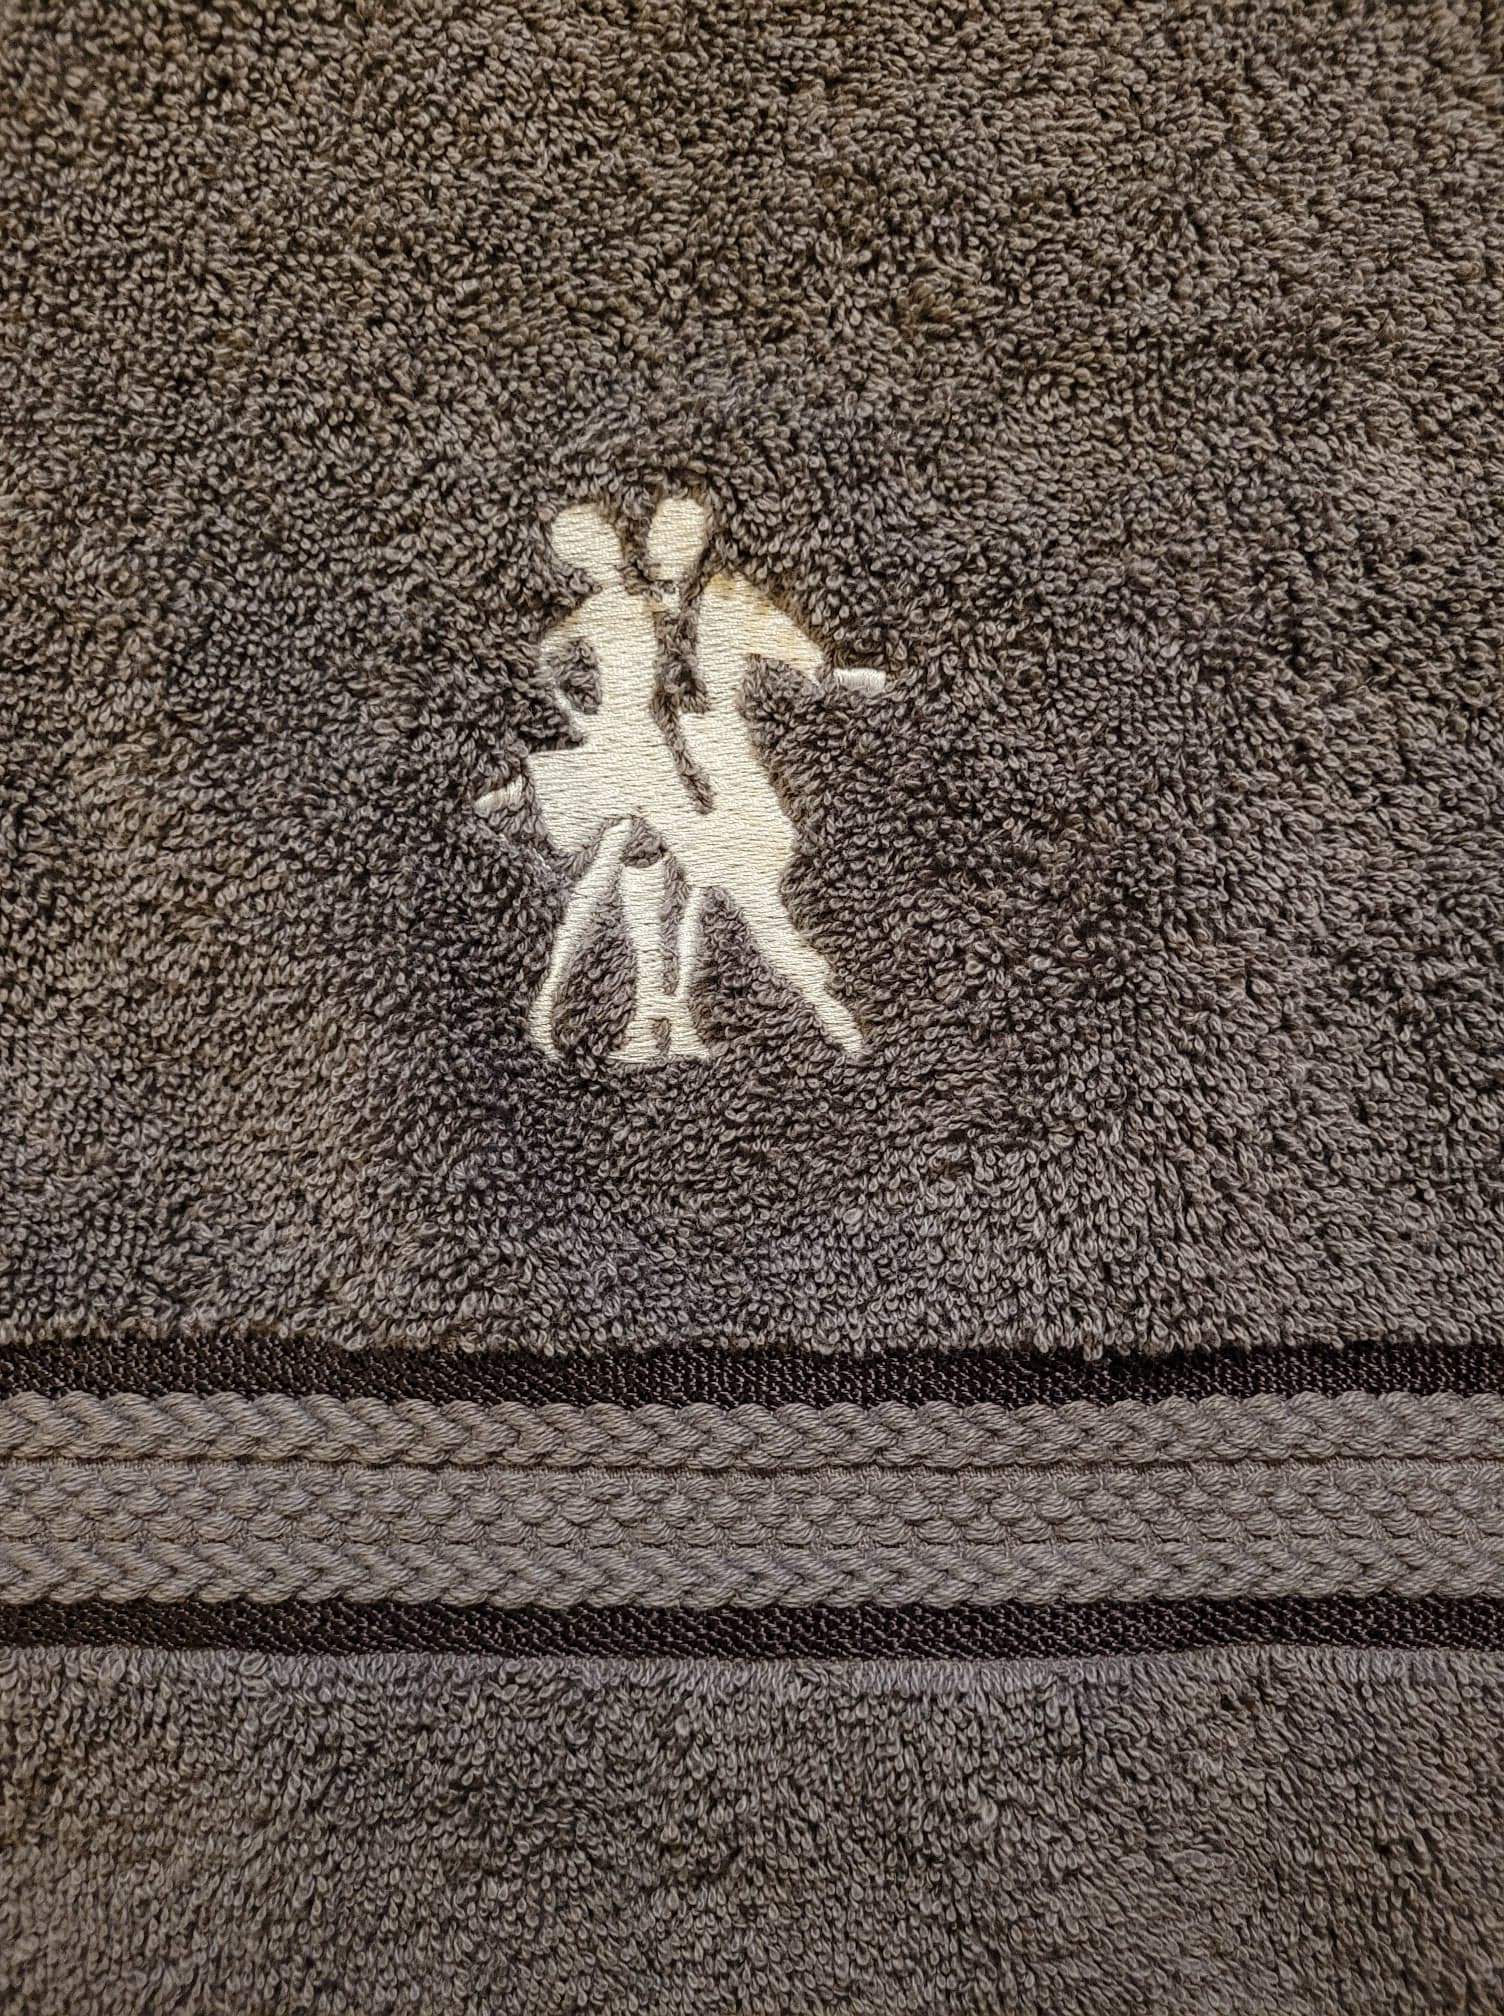 Dancing Couple Silhouette (Man Tail Suit) Towel